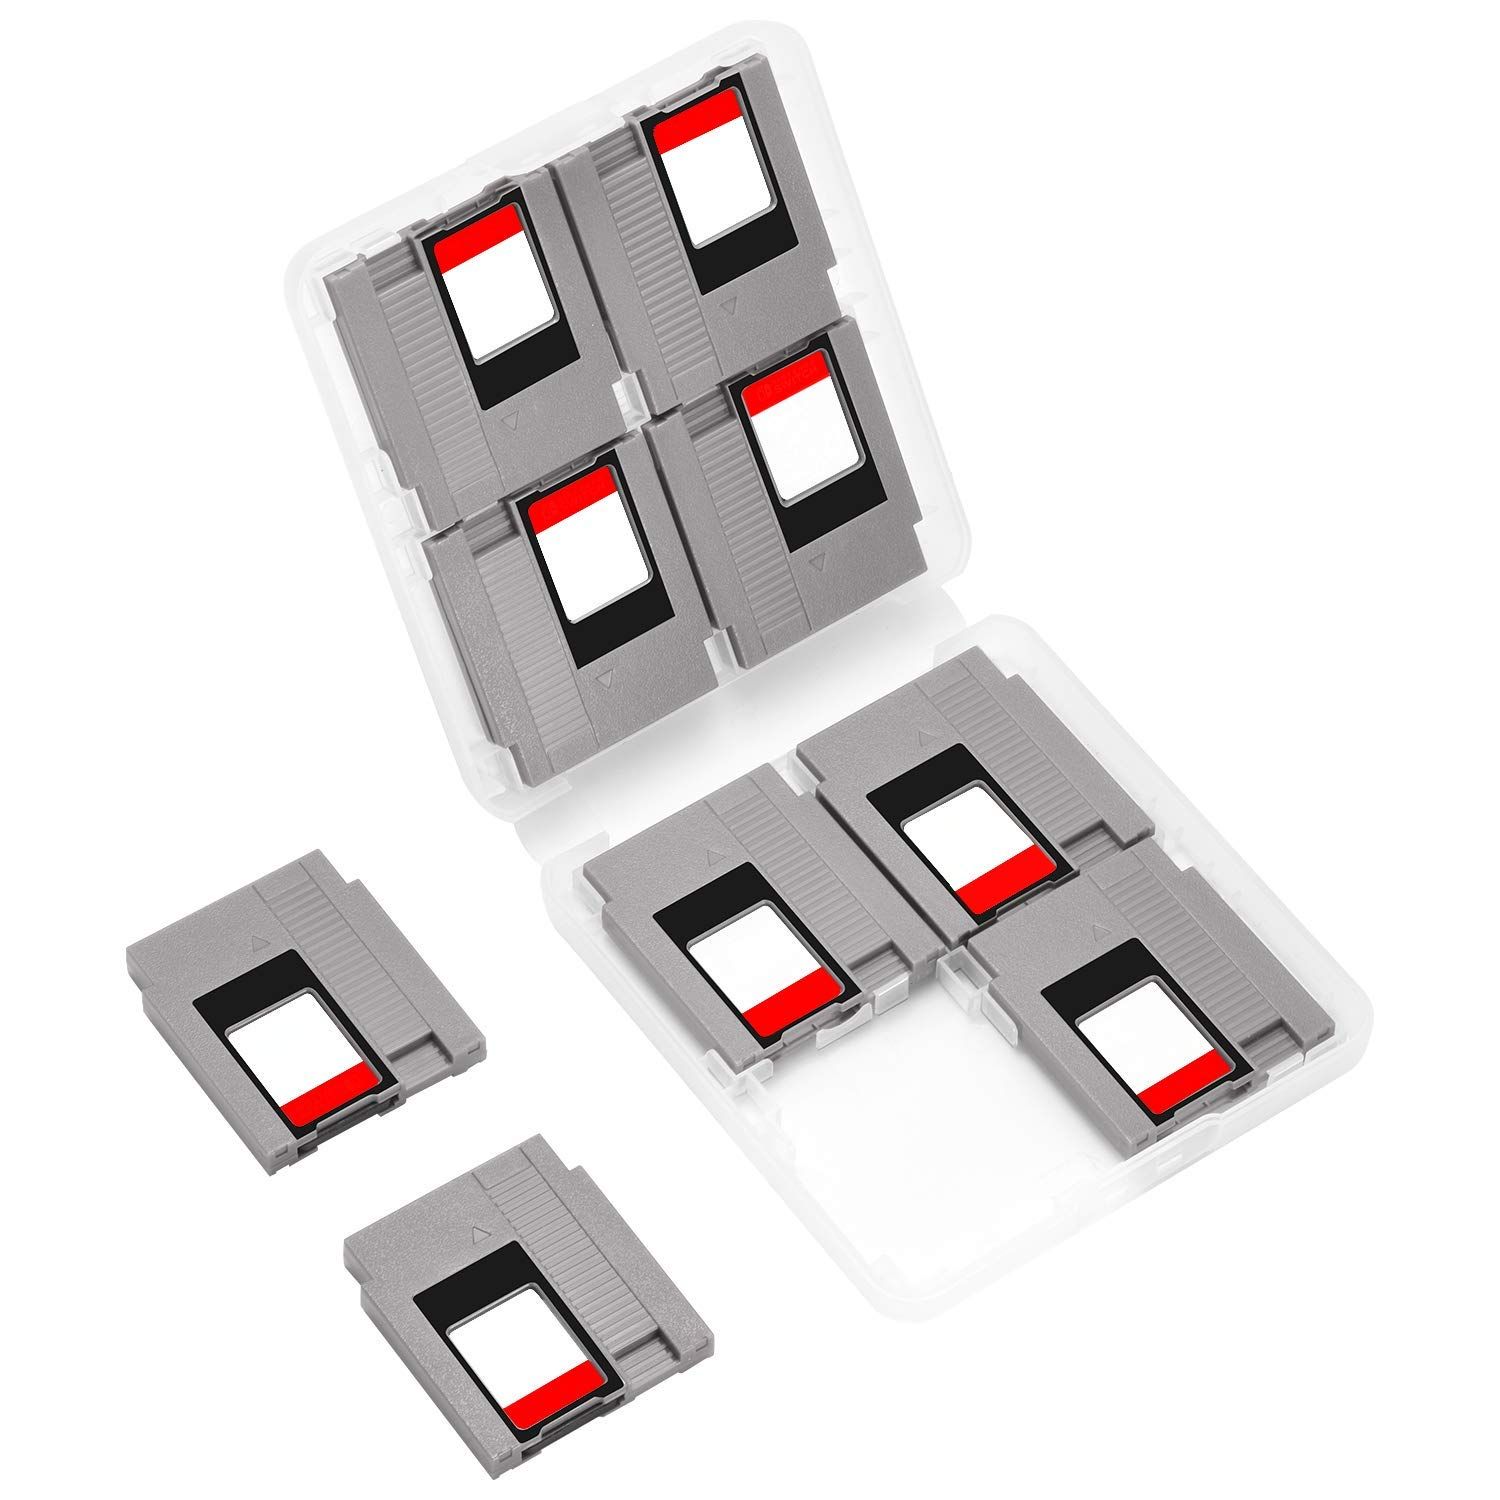 NES Nintendo Switch cartridge cases bundle